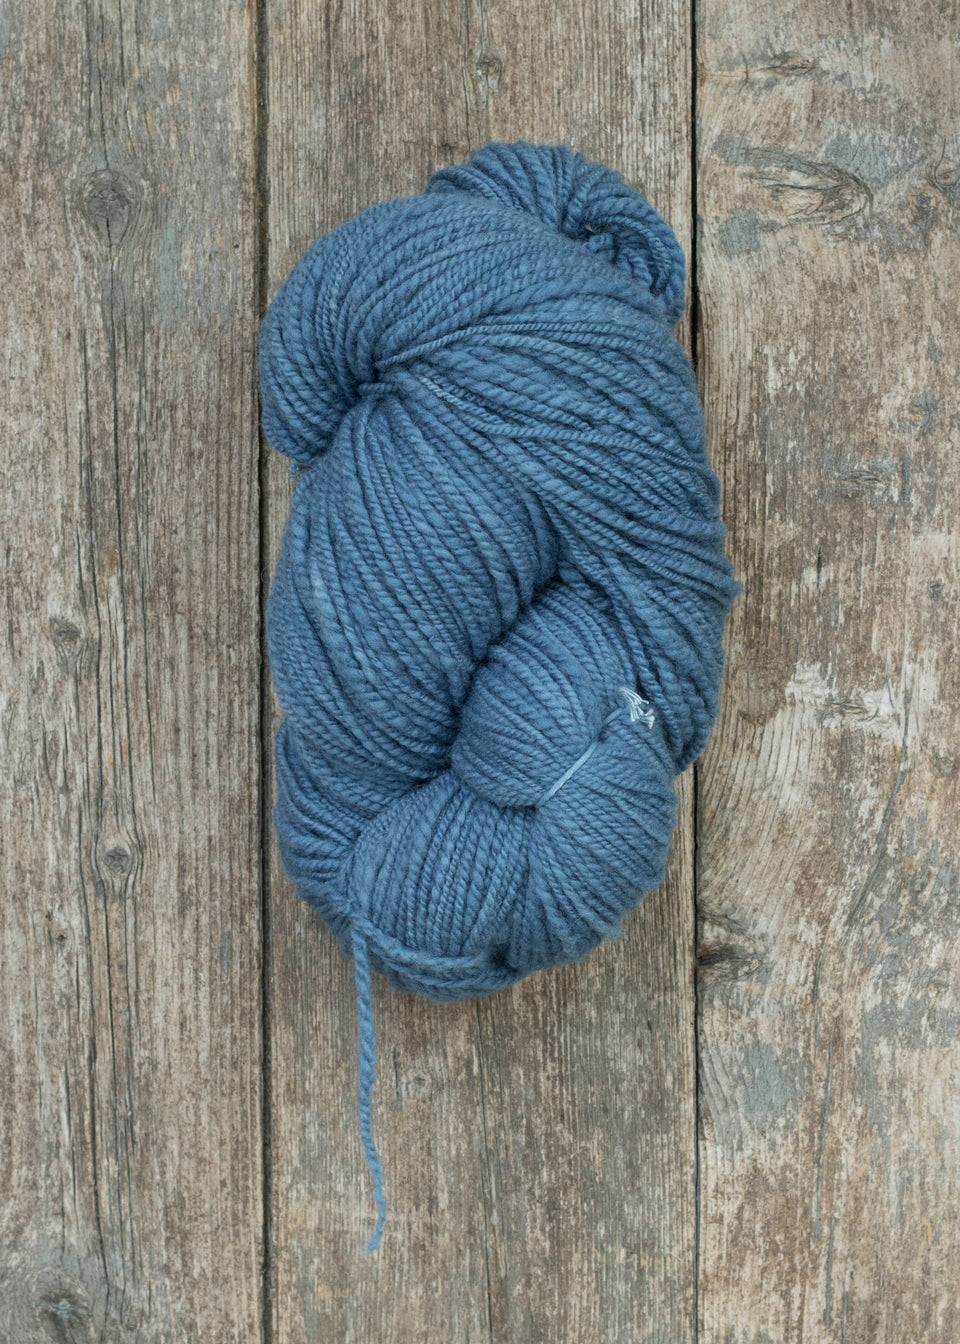 handspun, hand-dyed indigo yarn. polwarth and shetland blend. shown wound into a large skein. 